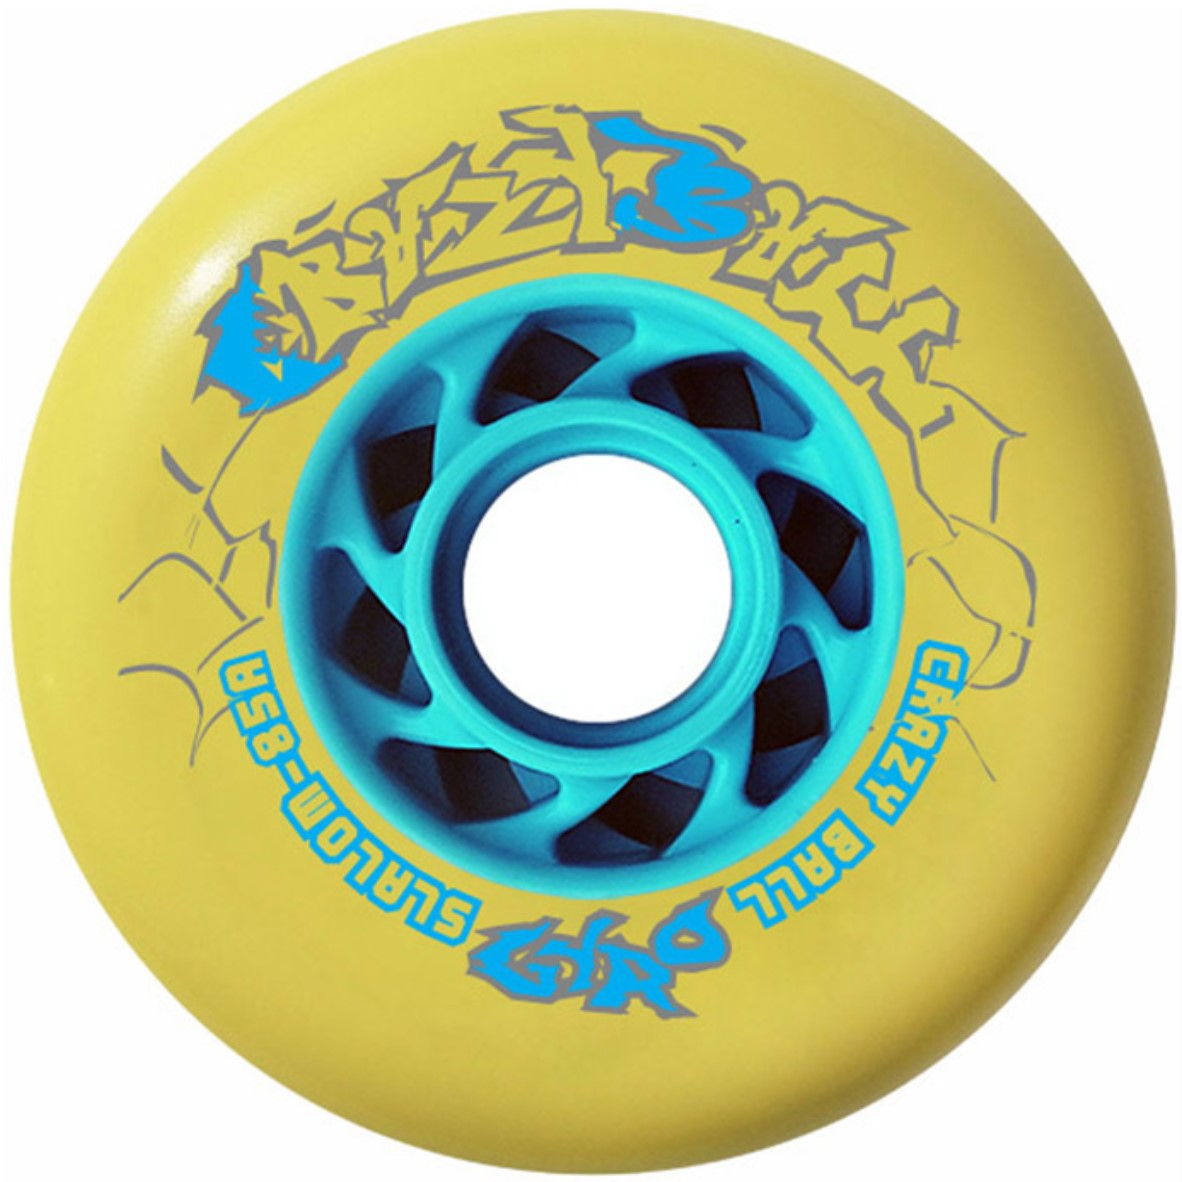 The yellow Gyro Crazyball speed slalom inlineskate wheel